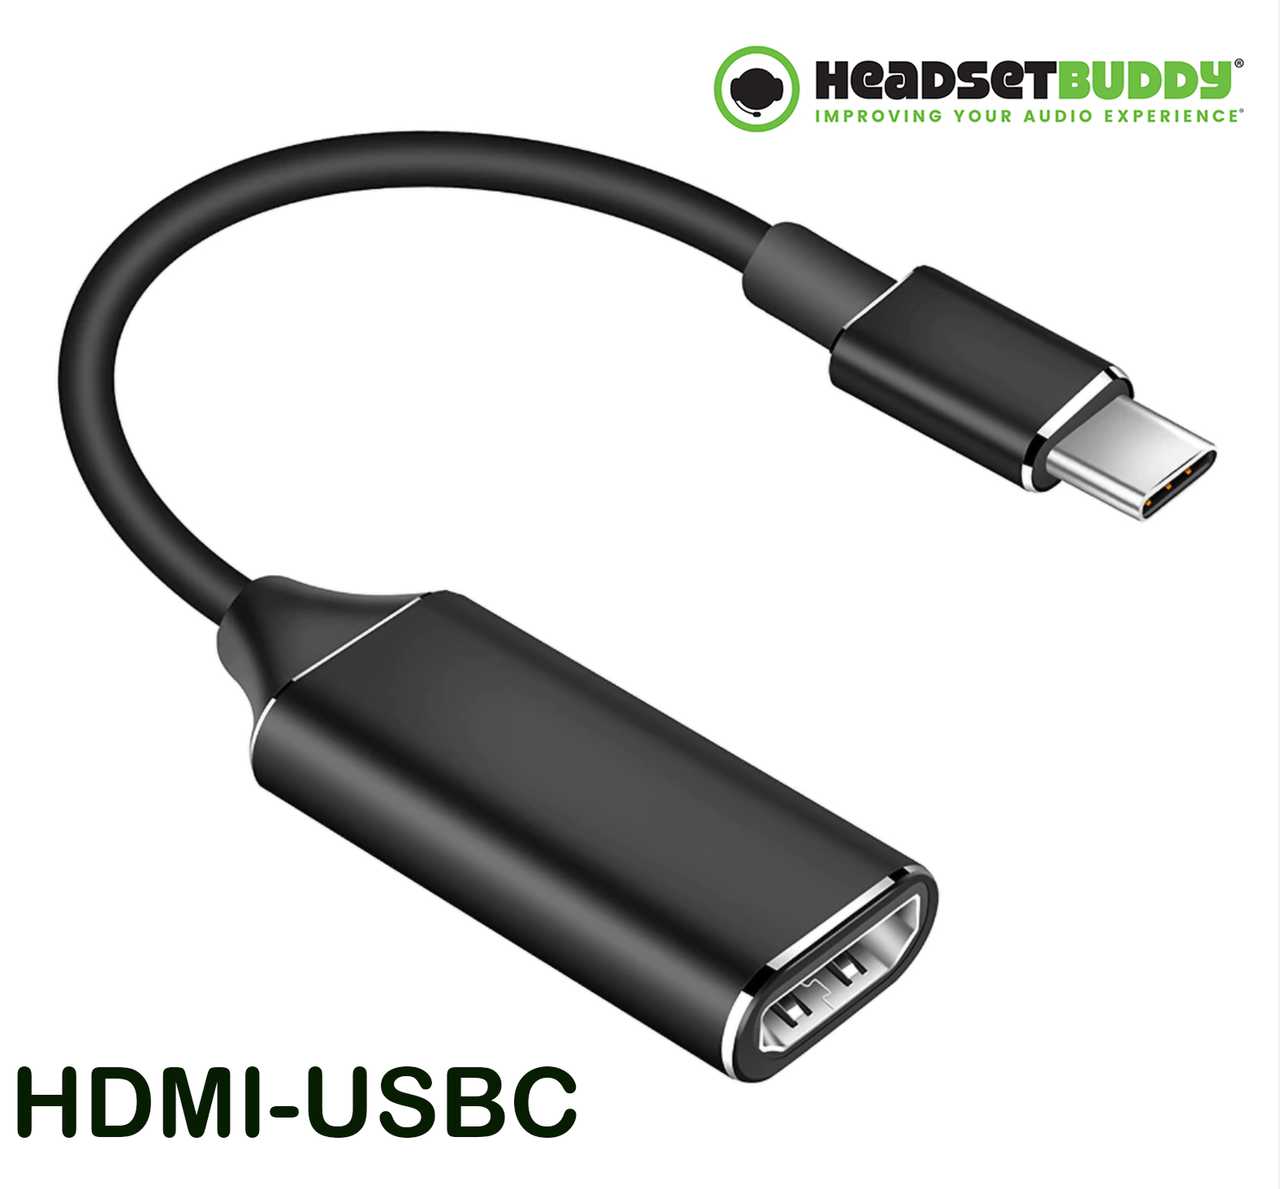 Headset Buddy HDMI-USBC 4K 30Hz Cable